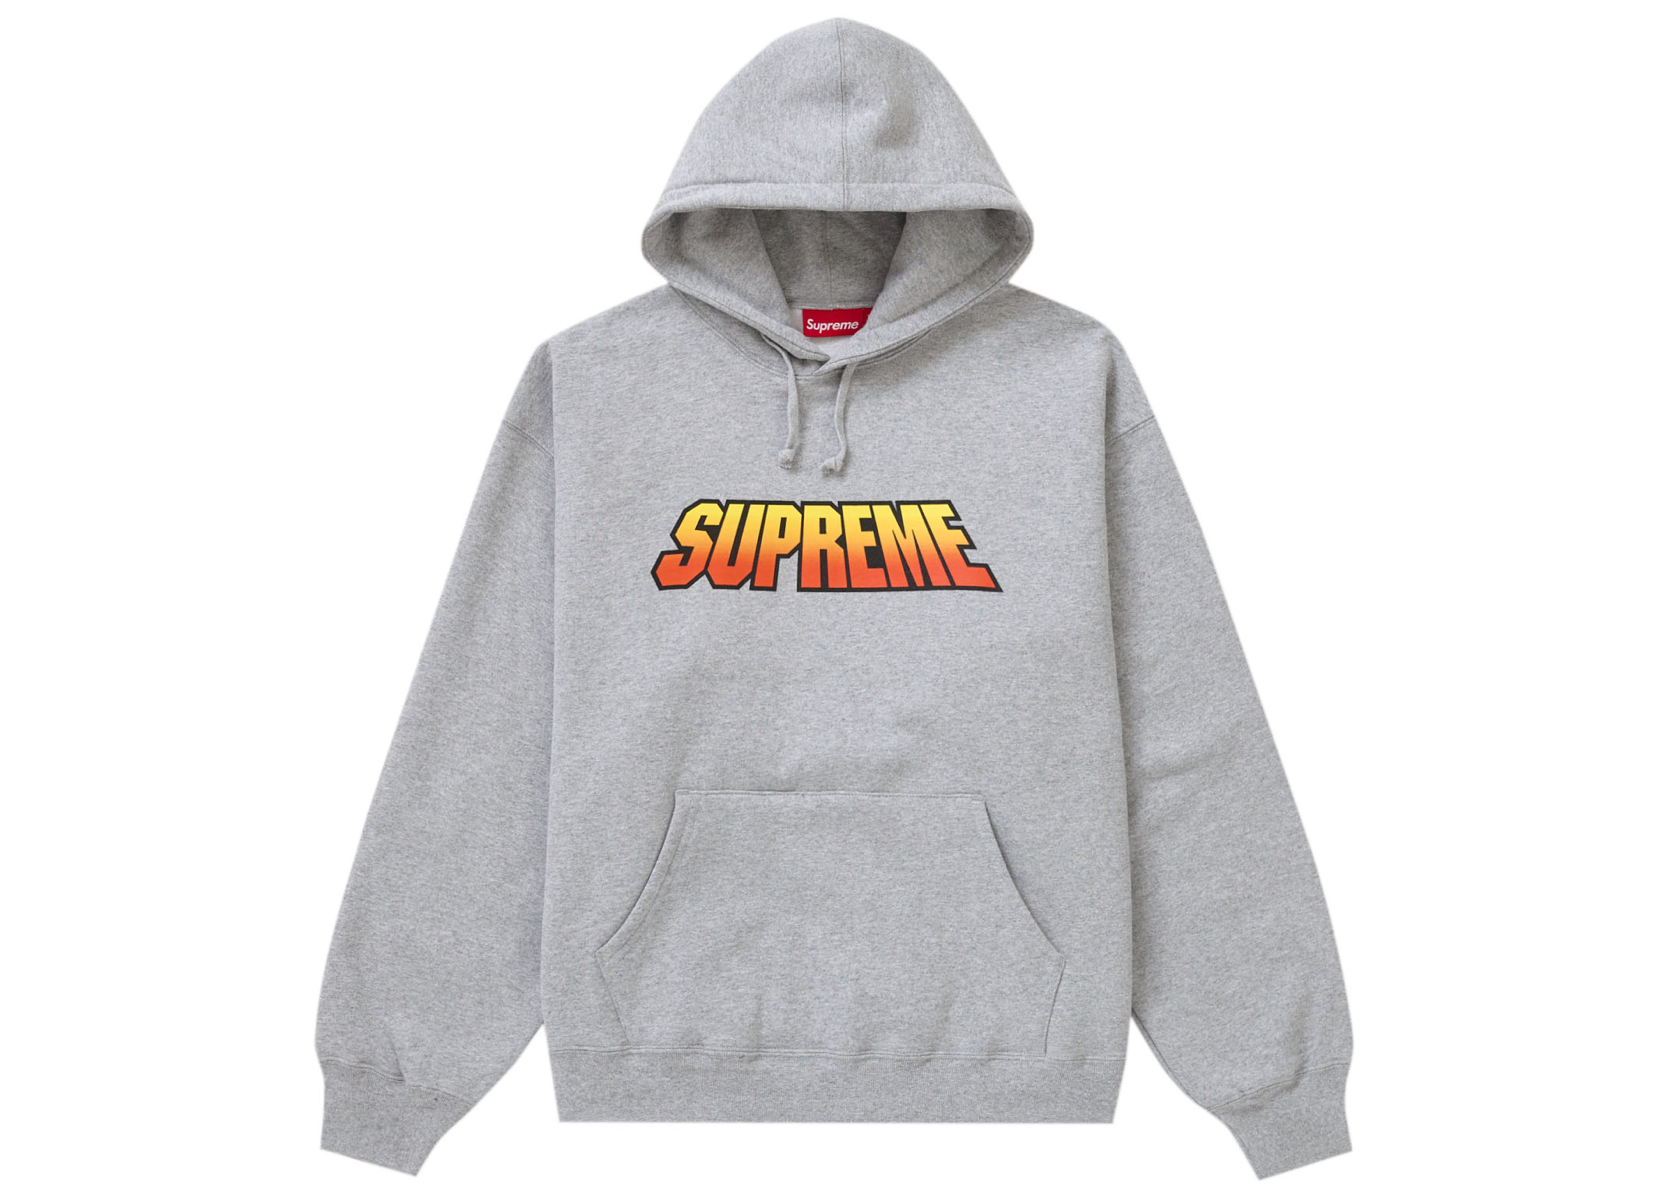 Supreme Gradient Hooded Sweatshirt33500円は厳しいでしょうか